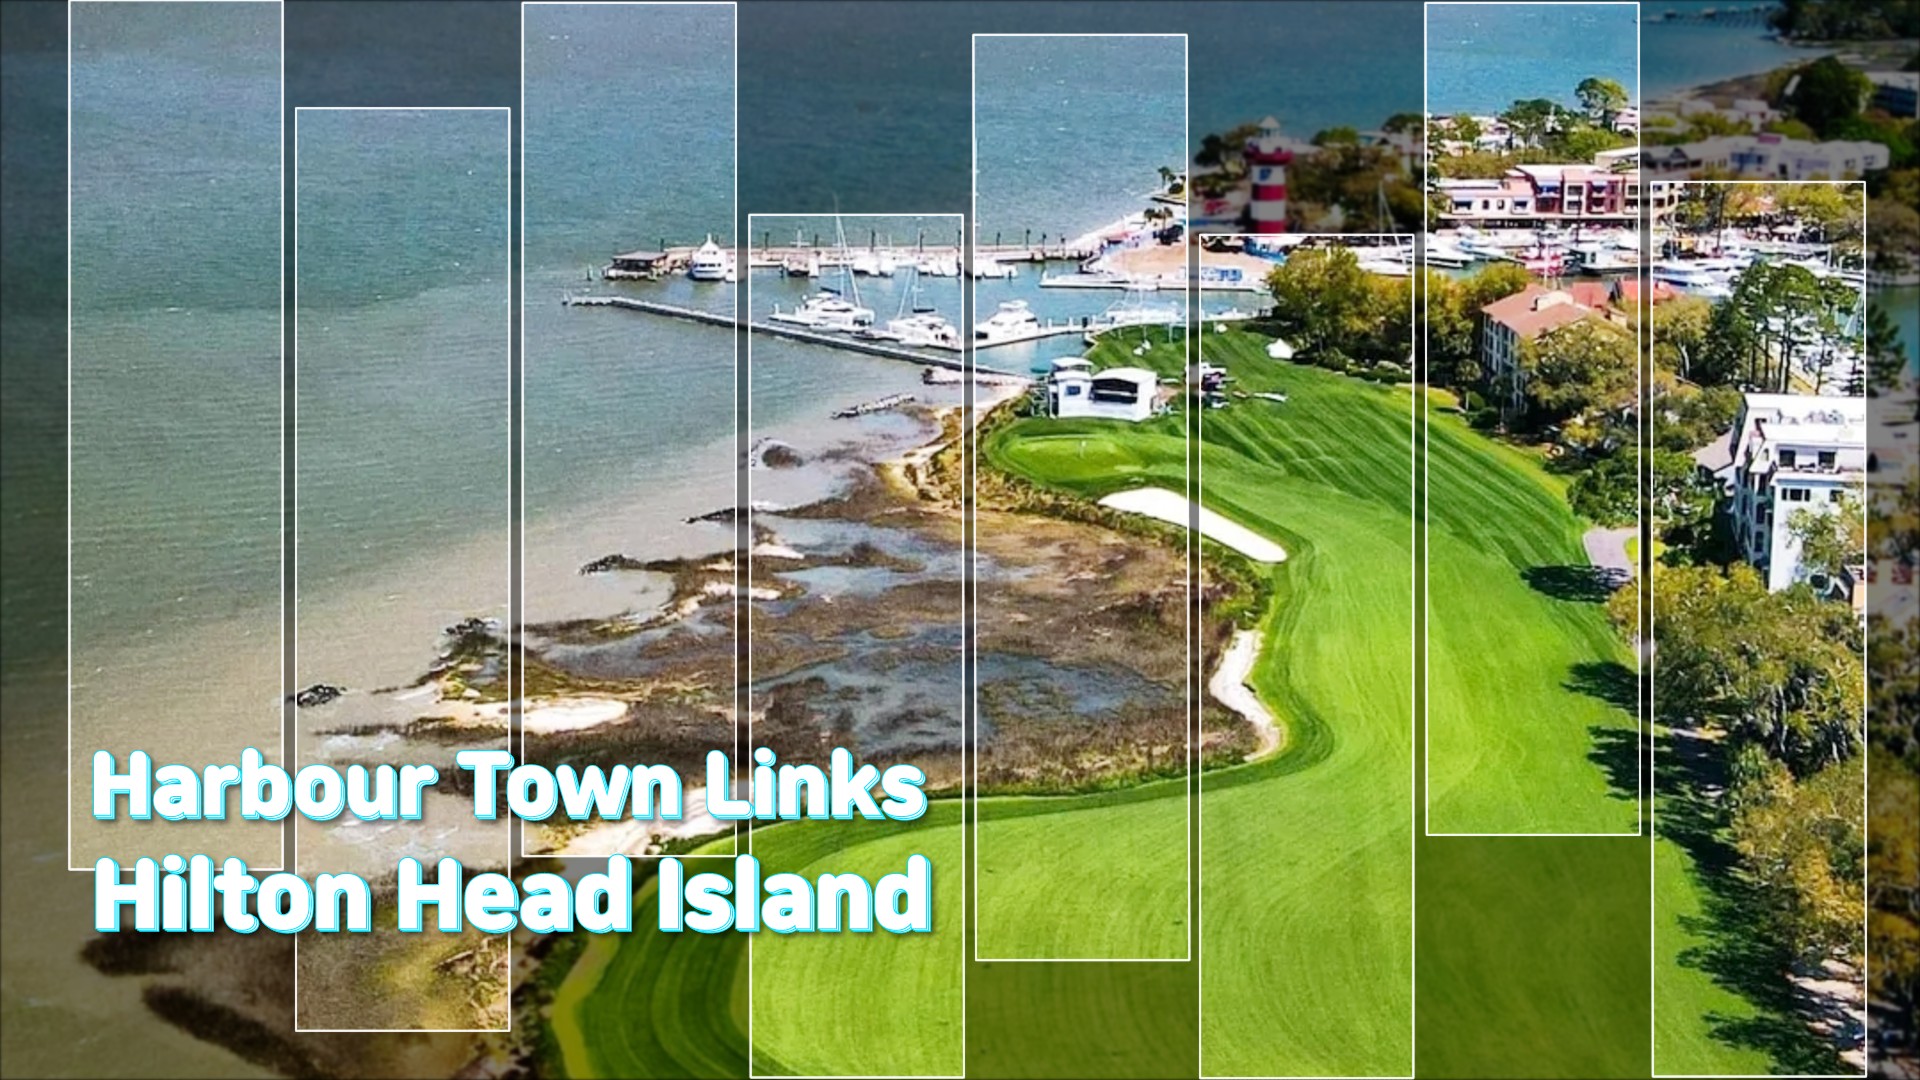 Harbour Town Golf Links는 힐턴 헤드 아일랜드의 해안 골프코스이다